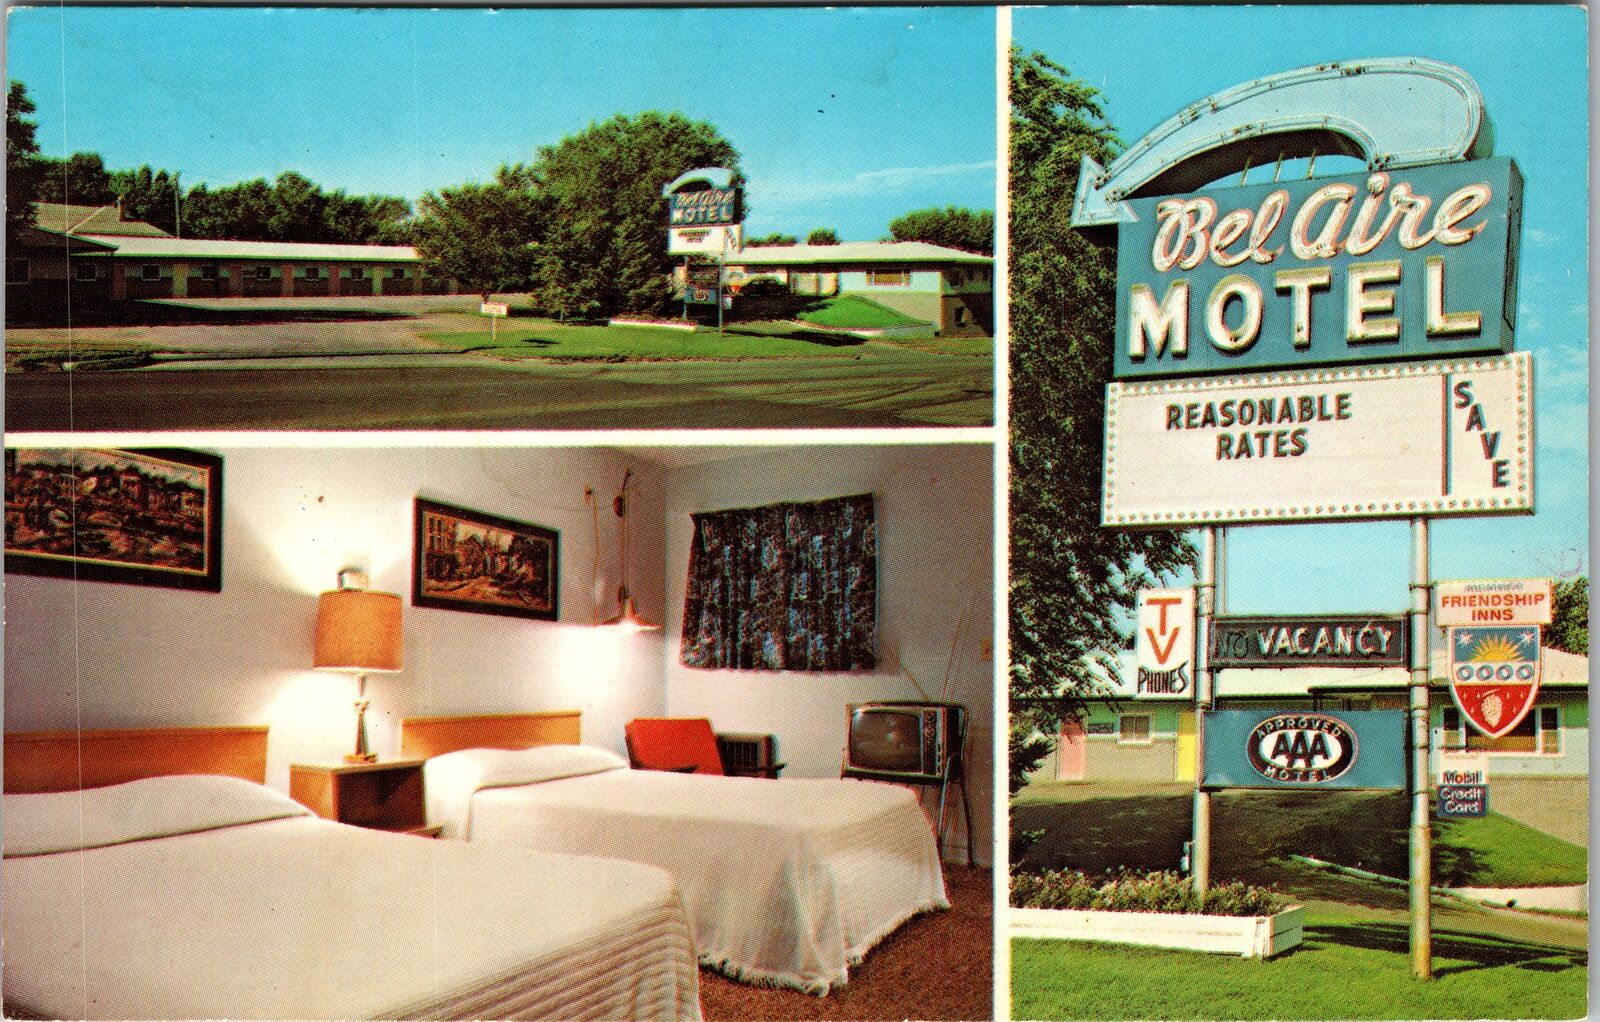 Chamberlain SD-South Dakota, Bel Aire Motel, Sign, Vintage Postcard